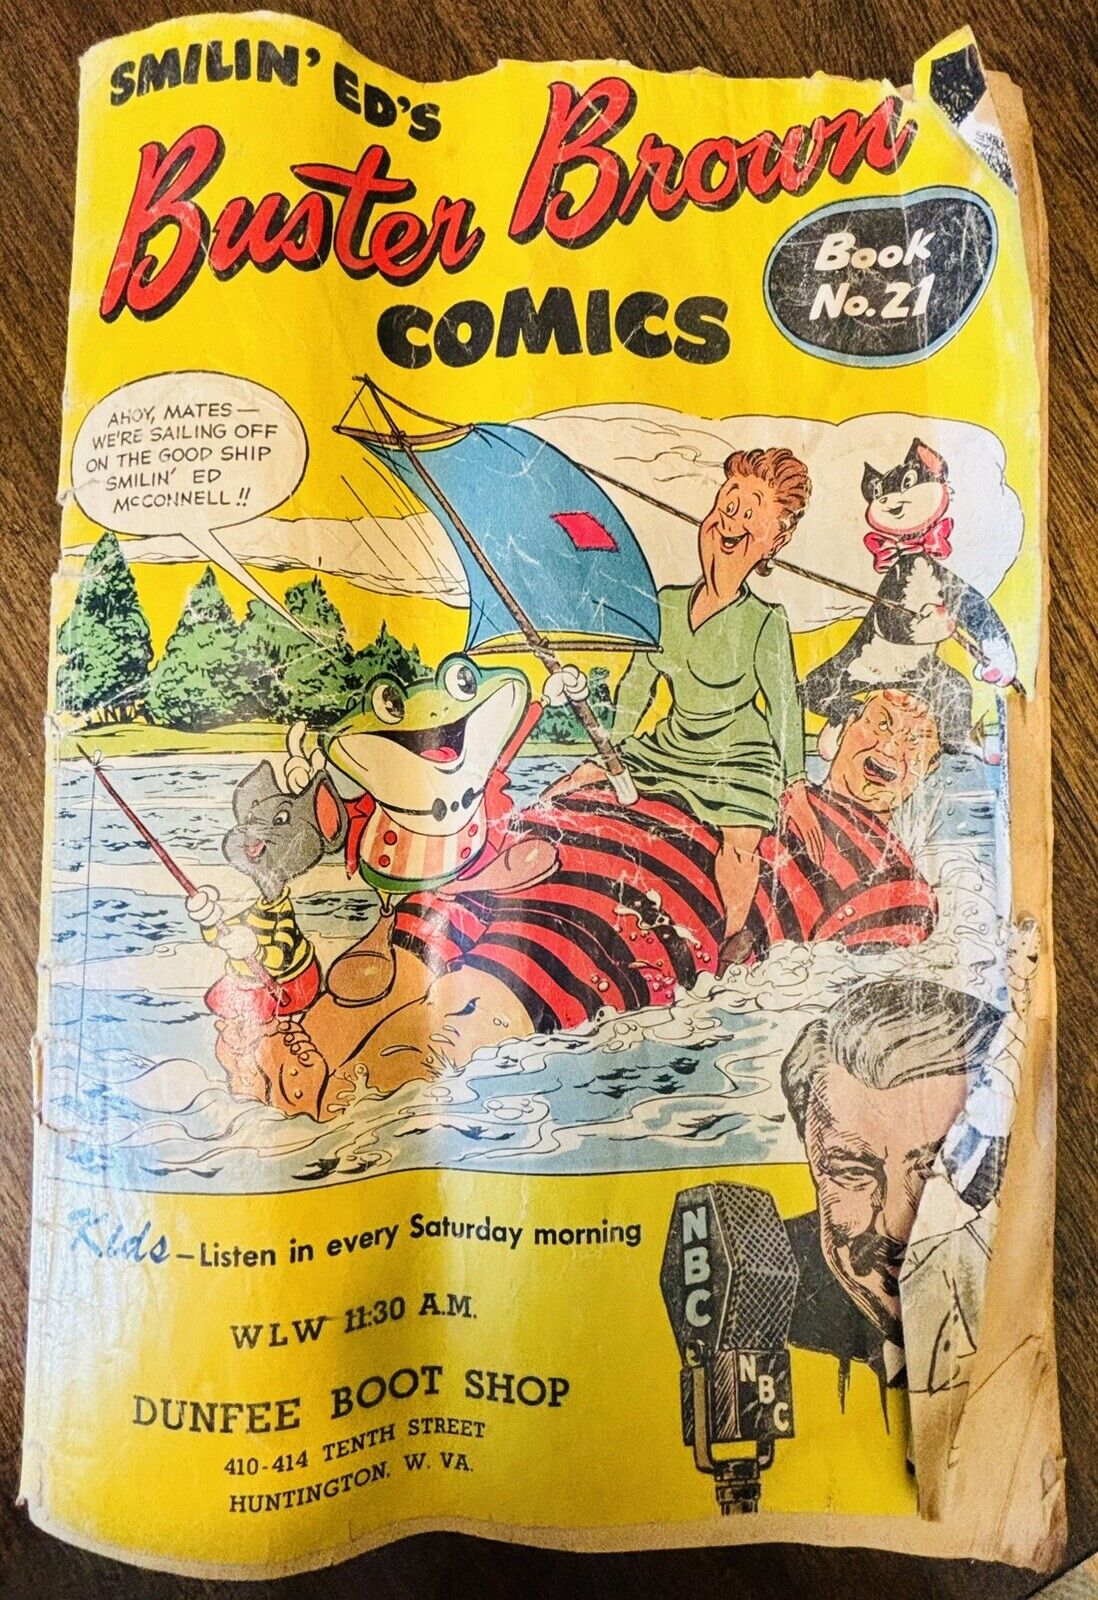 1946 Smilin\' Ed\'s Buster Brown Comics - Book No. 21